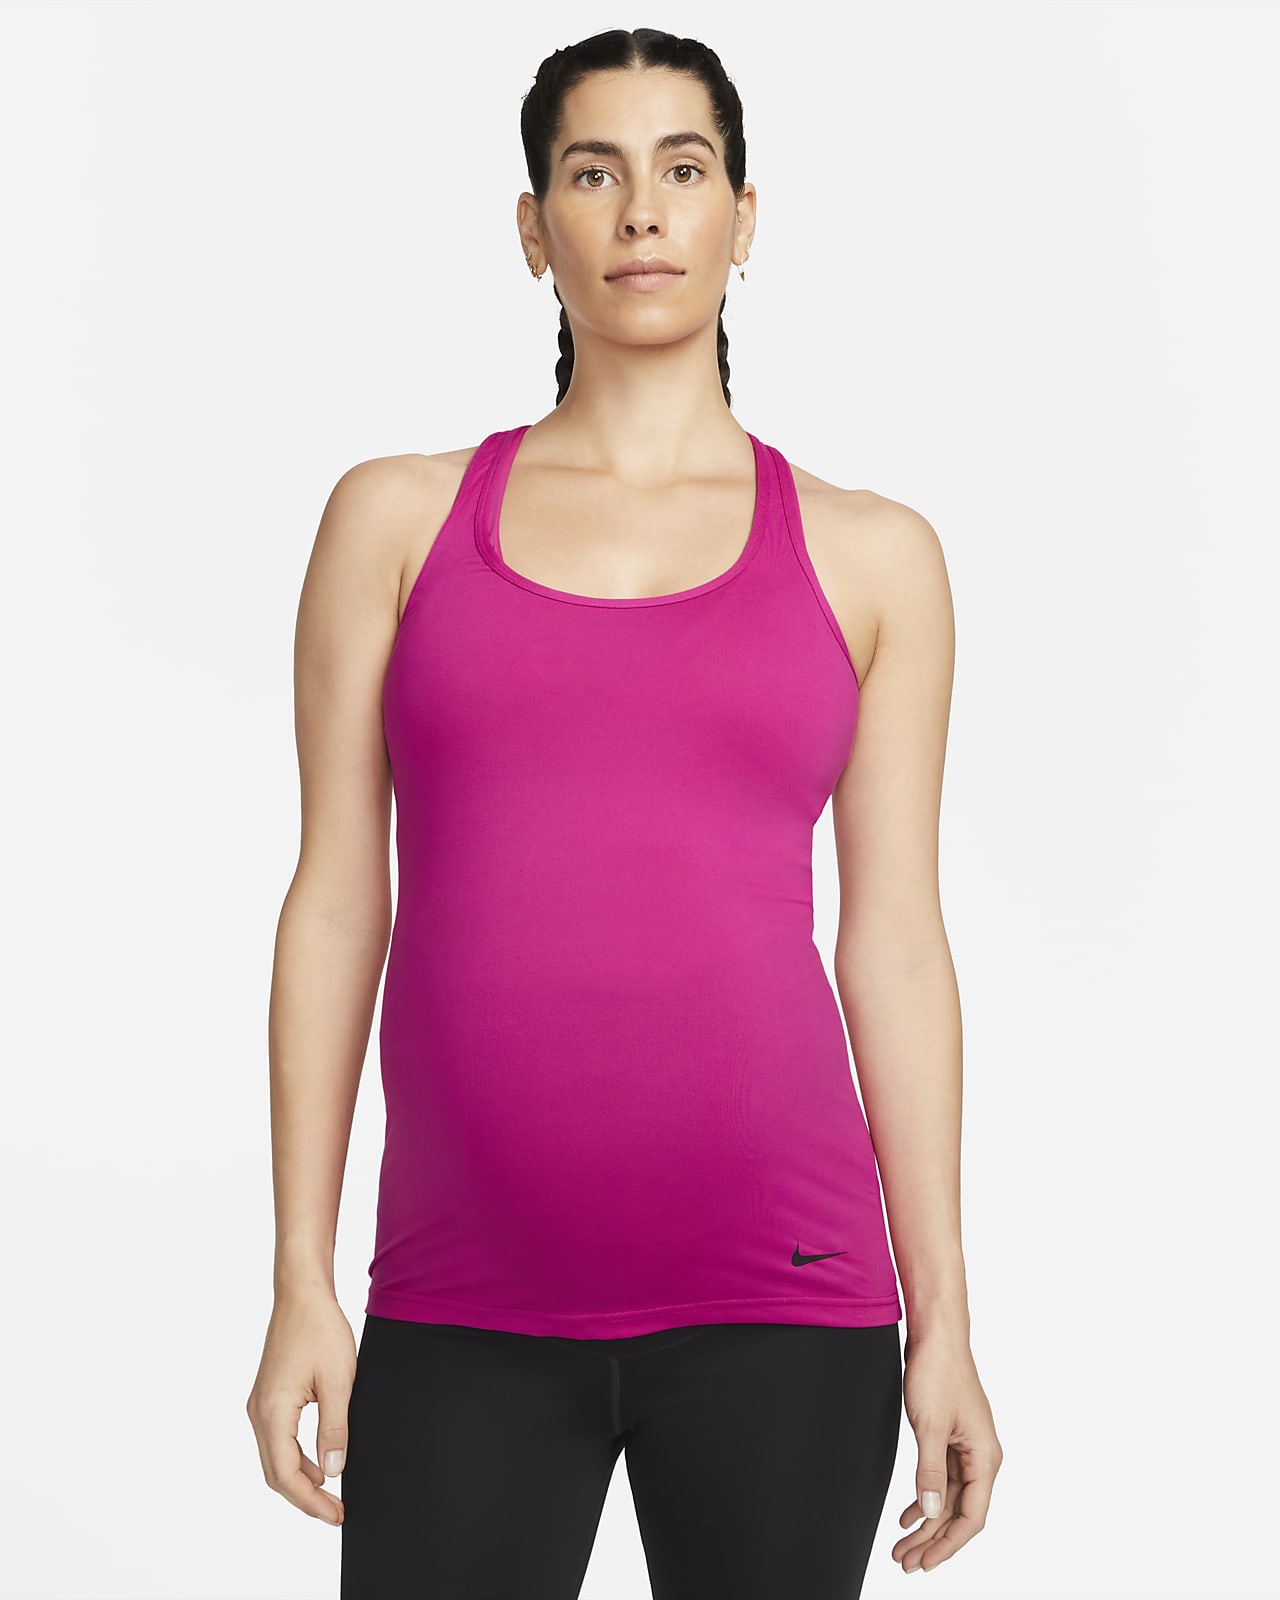 Camiseta de tirantes para mujer Nike Dri-FIT (maternidad)